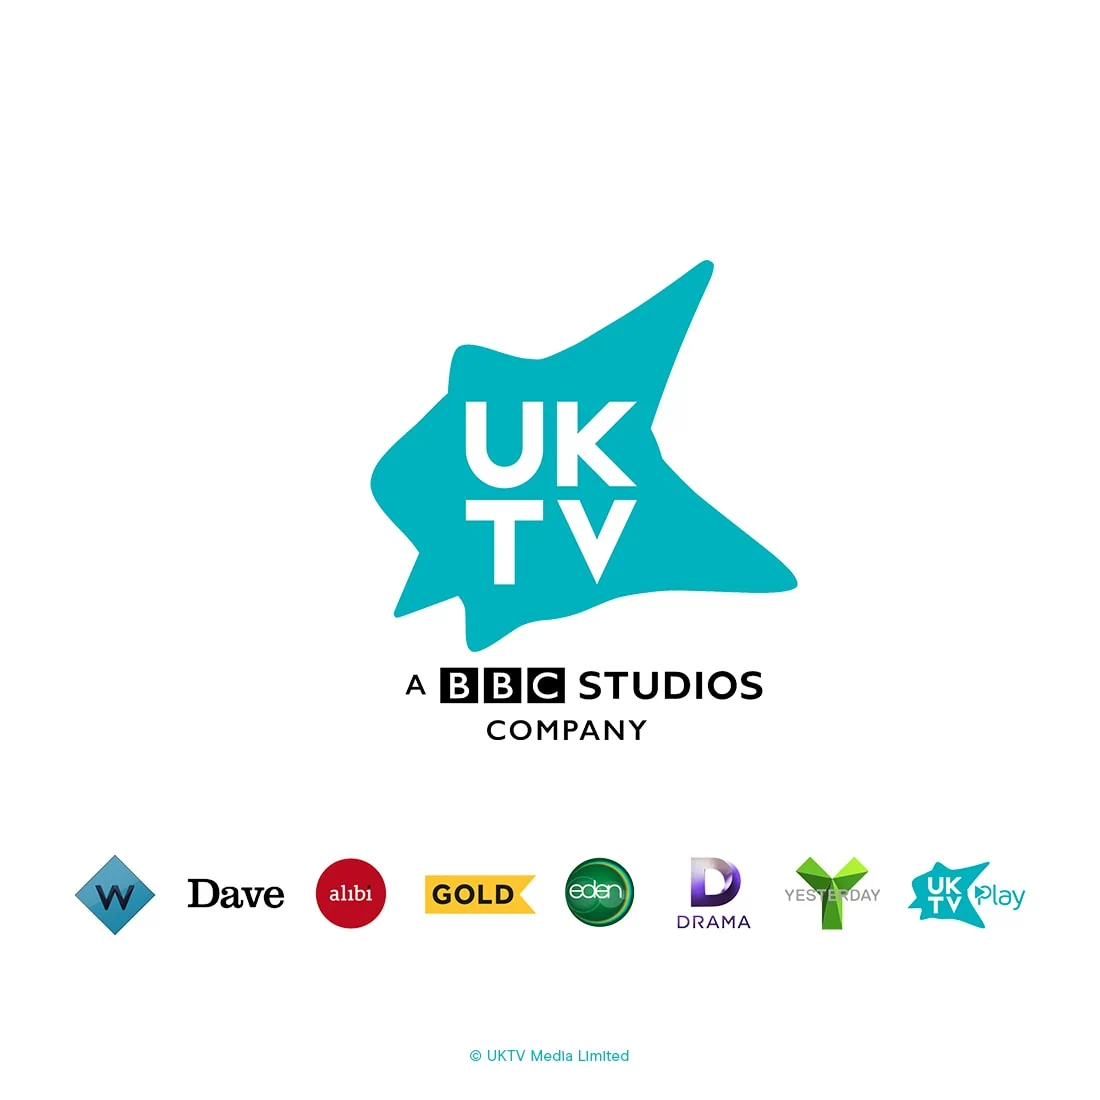 UKTV logo and channels